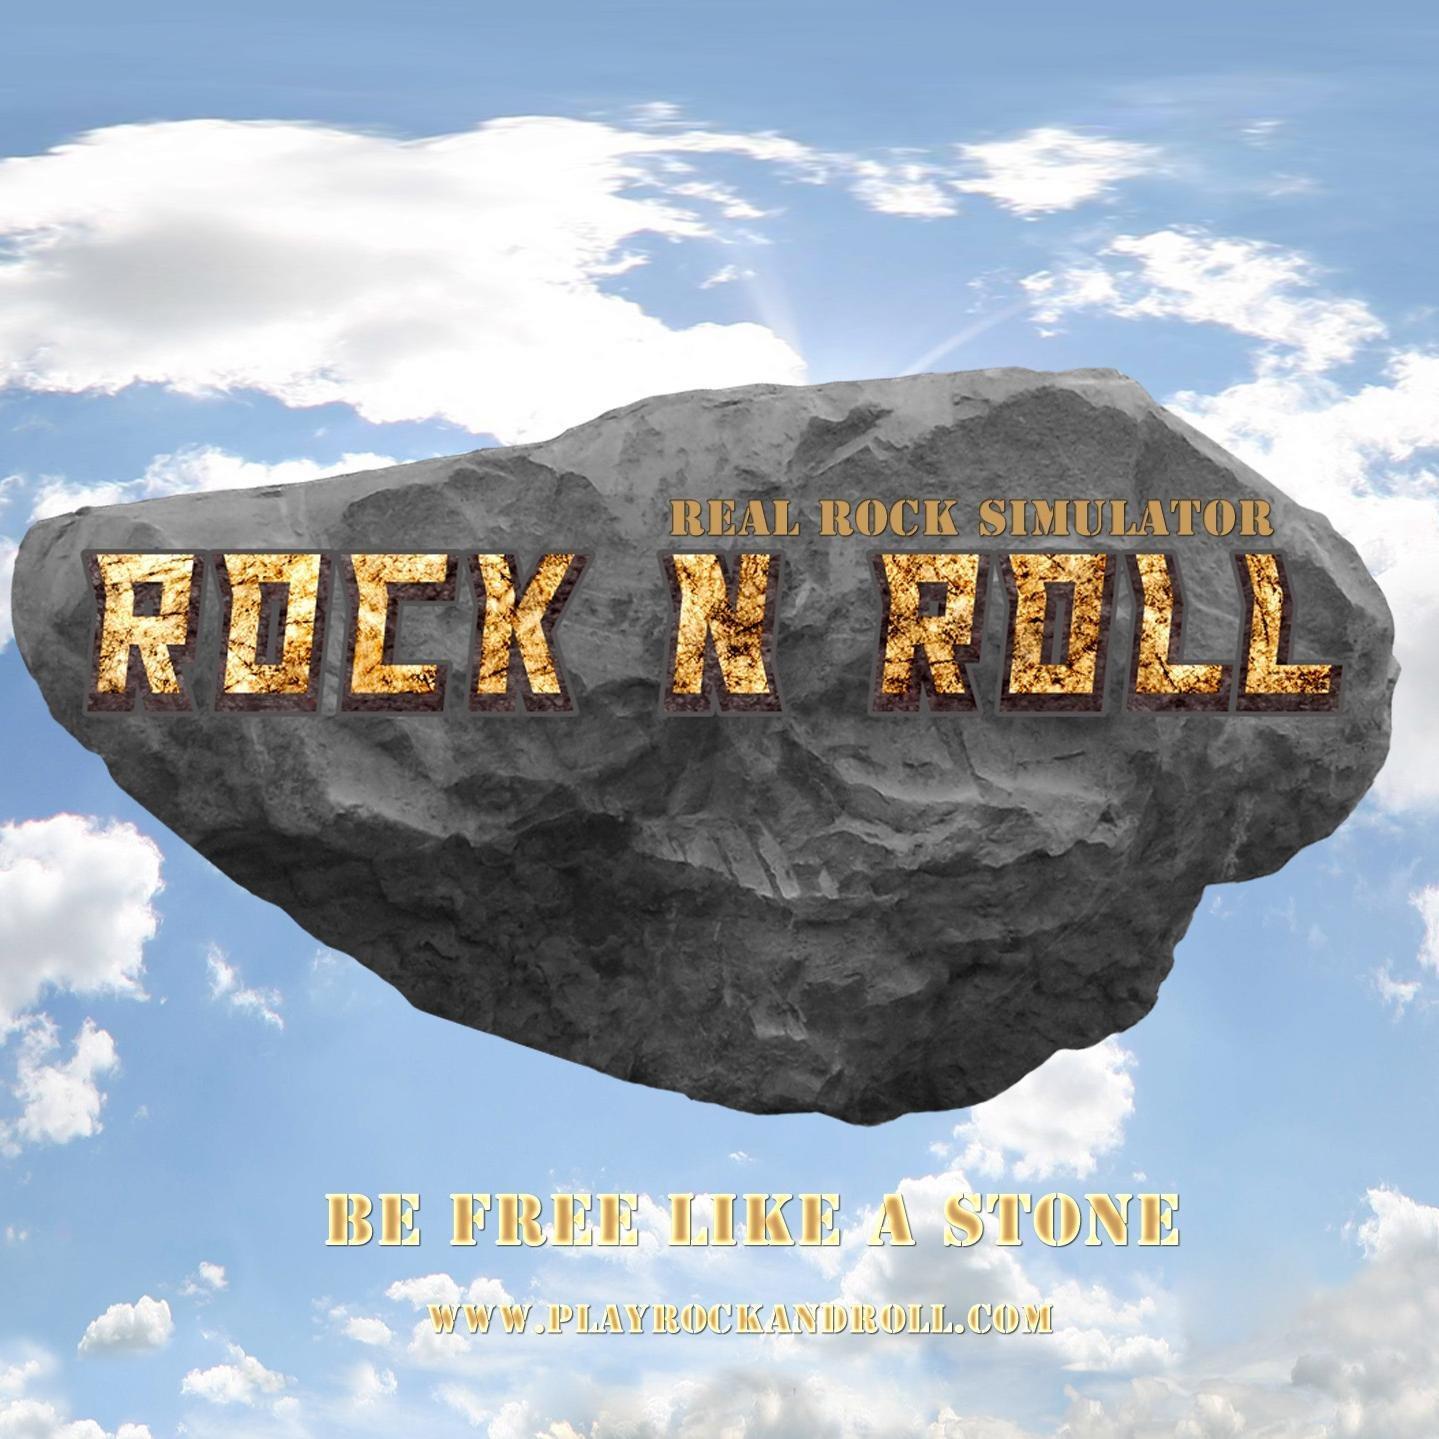 Rock and Roll - продвинутый симулятор камня с элементами MMORPG. Будь свободен как камень! :)